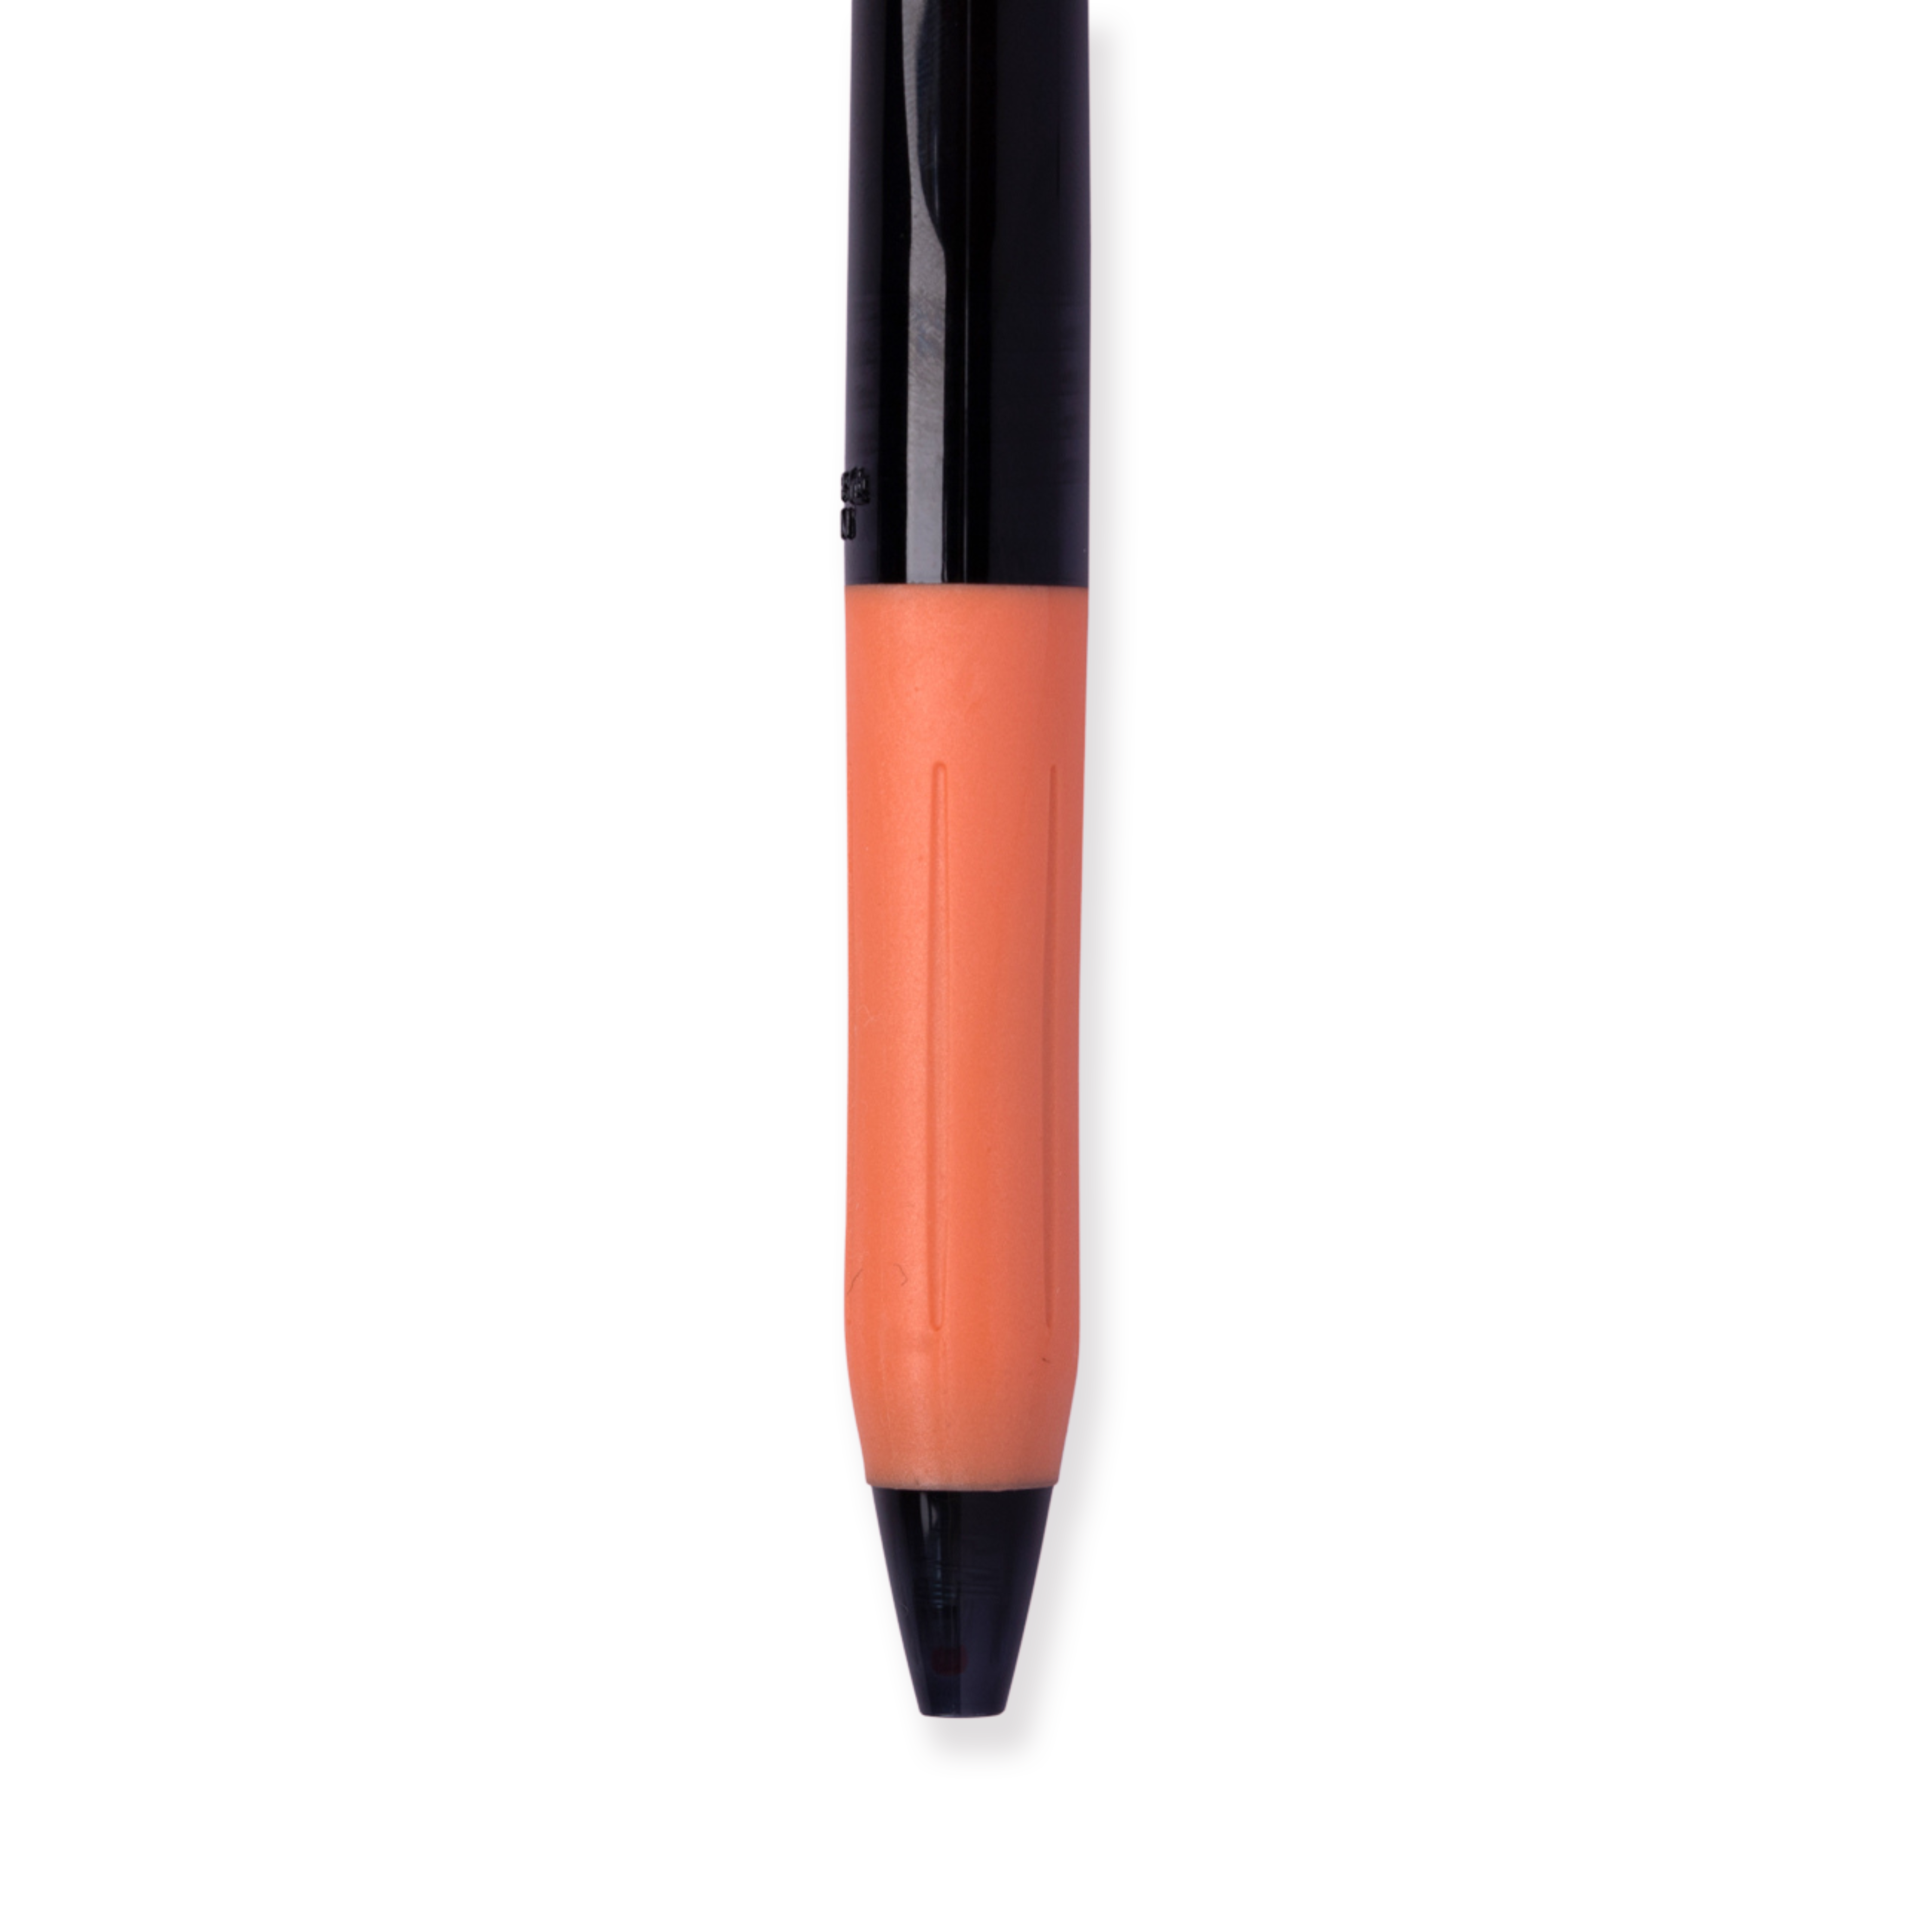 Zebra Sarasa Deco Shine Metallic Pen - 0.5mm -  Shiny Orange